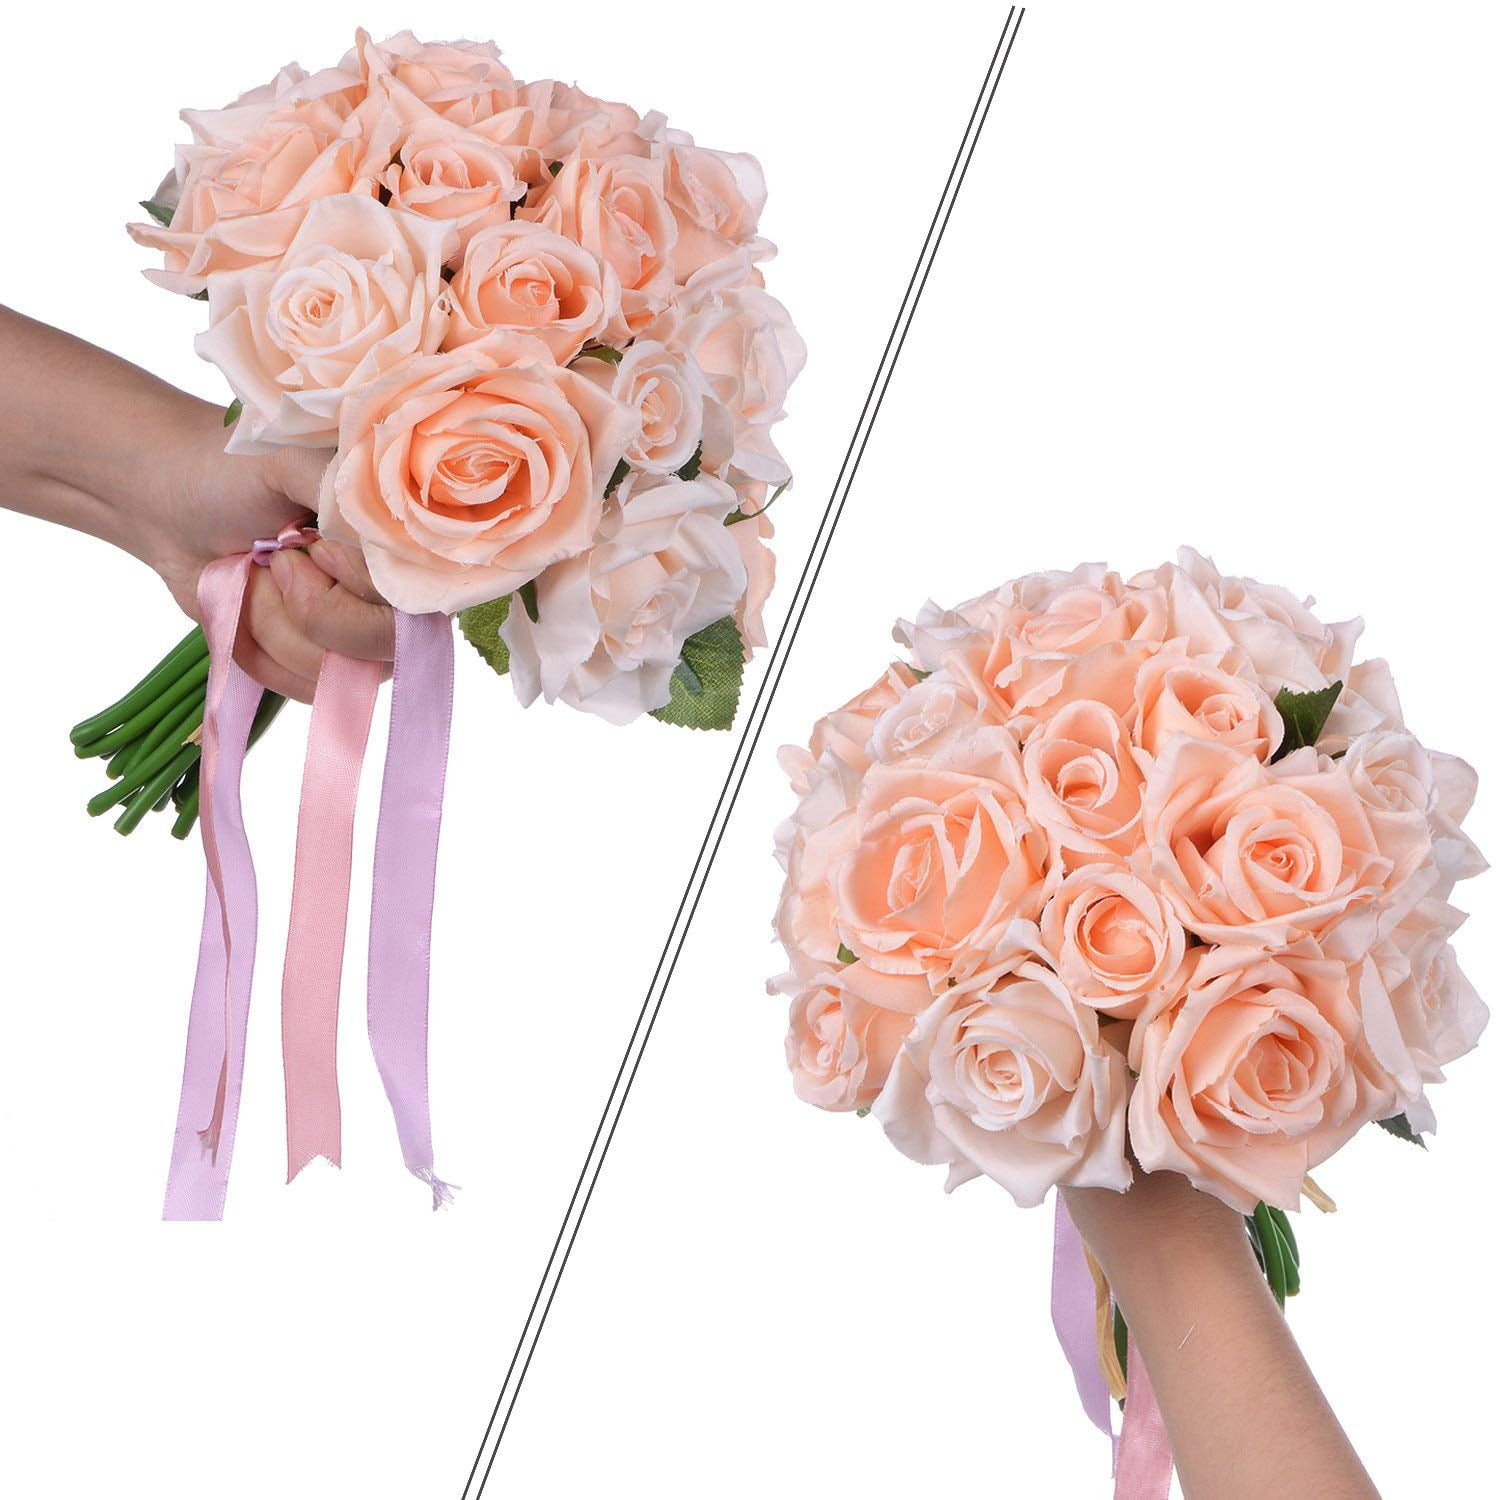 Handmade Bridal Artificial Foam Roses Flower Bouquet Wedding Bride Party Decor 